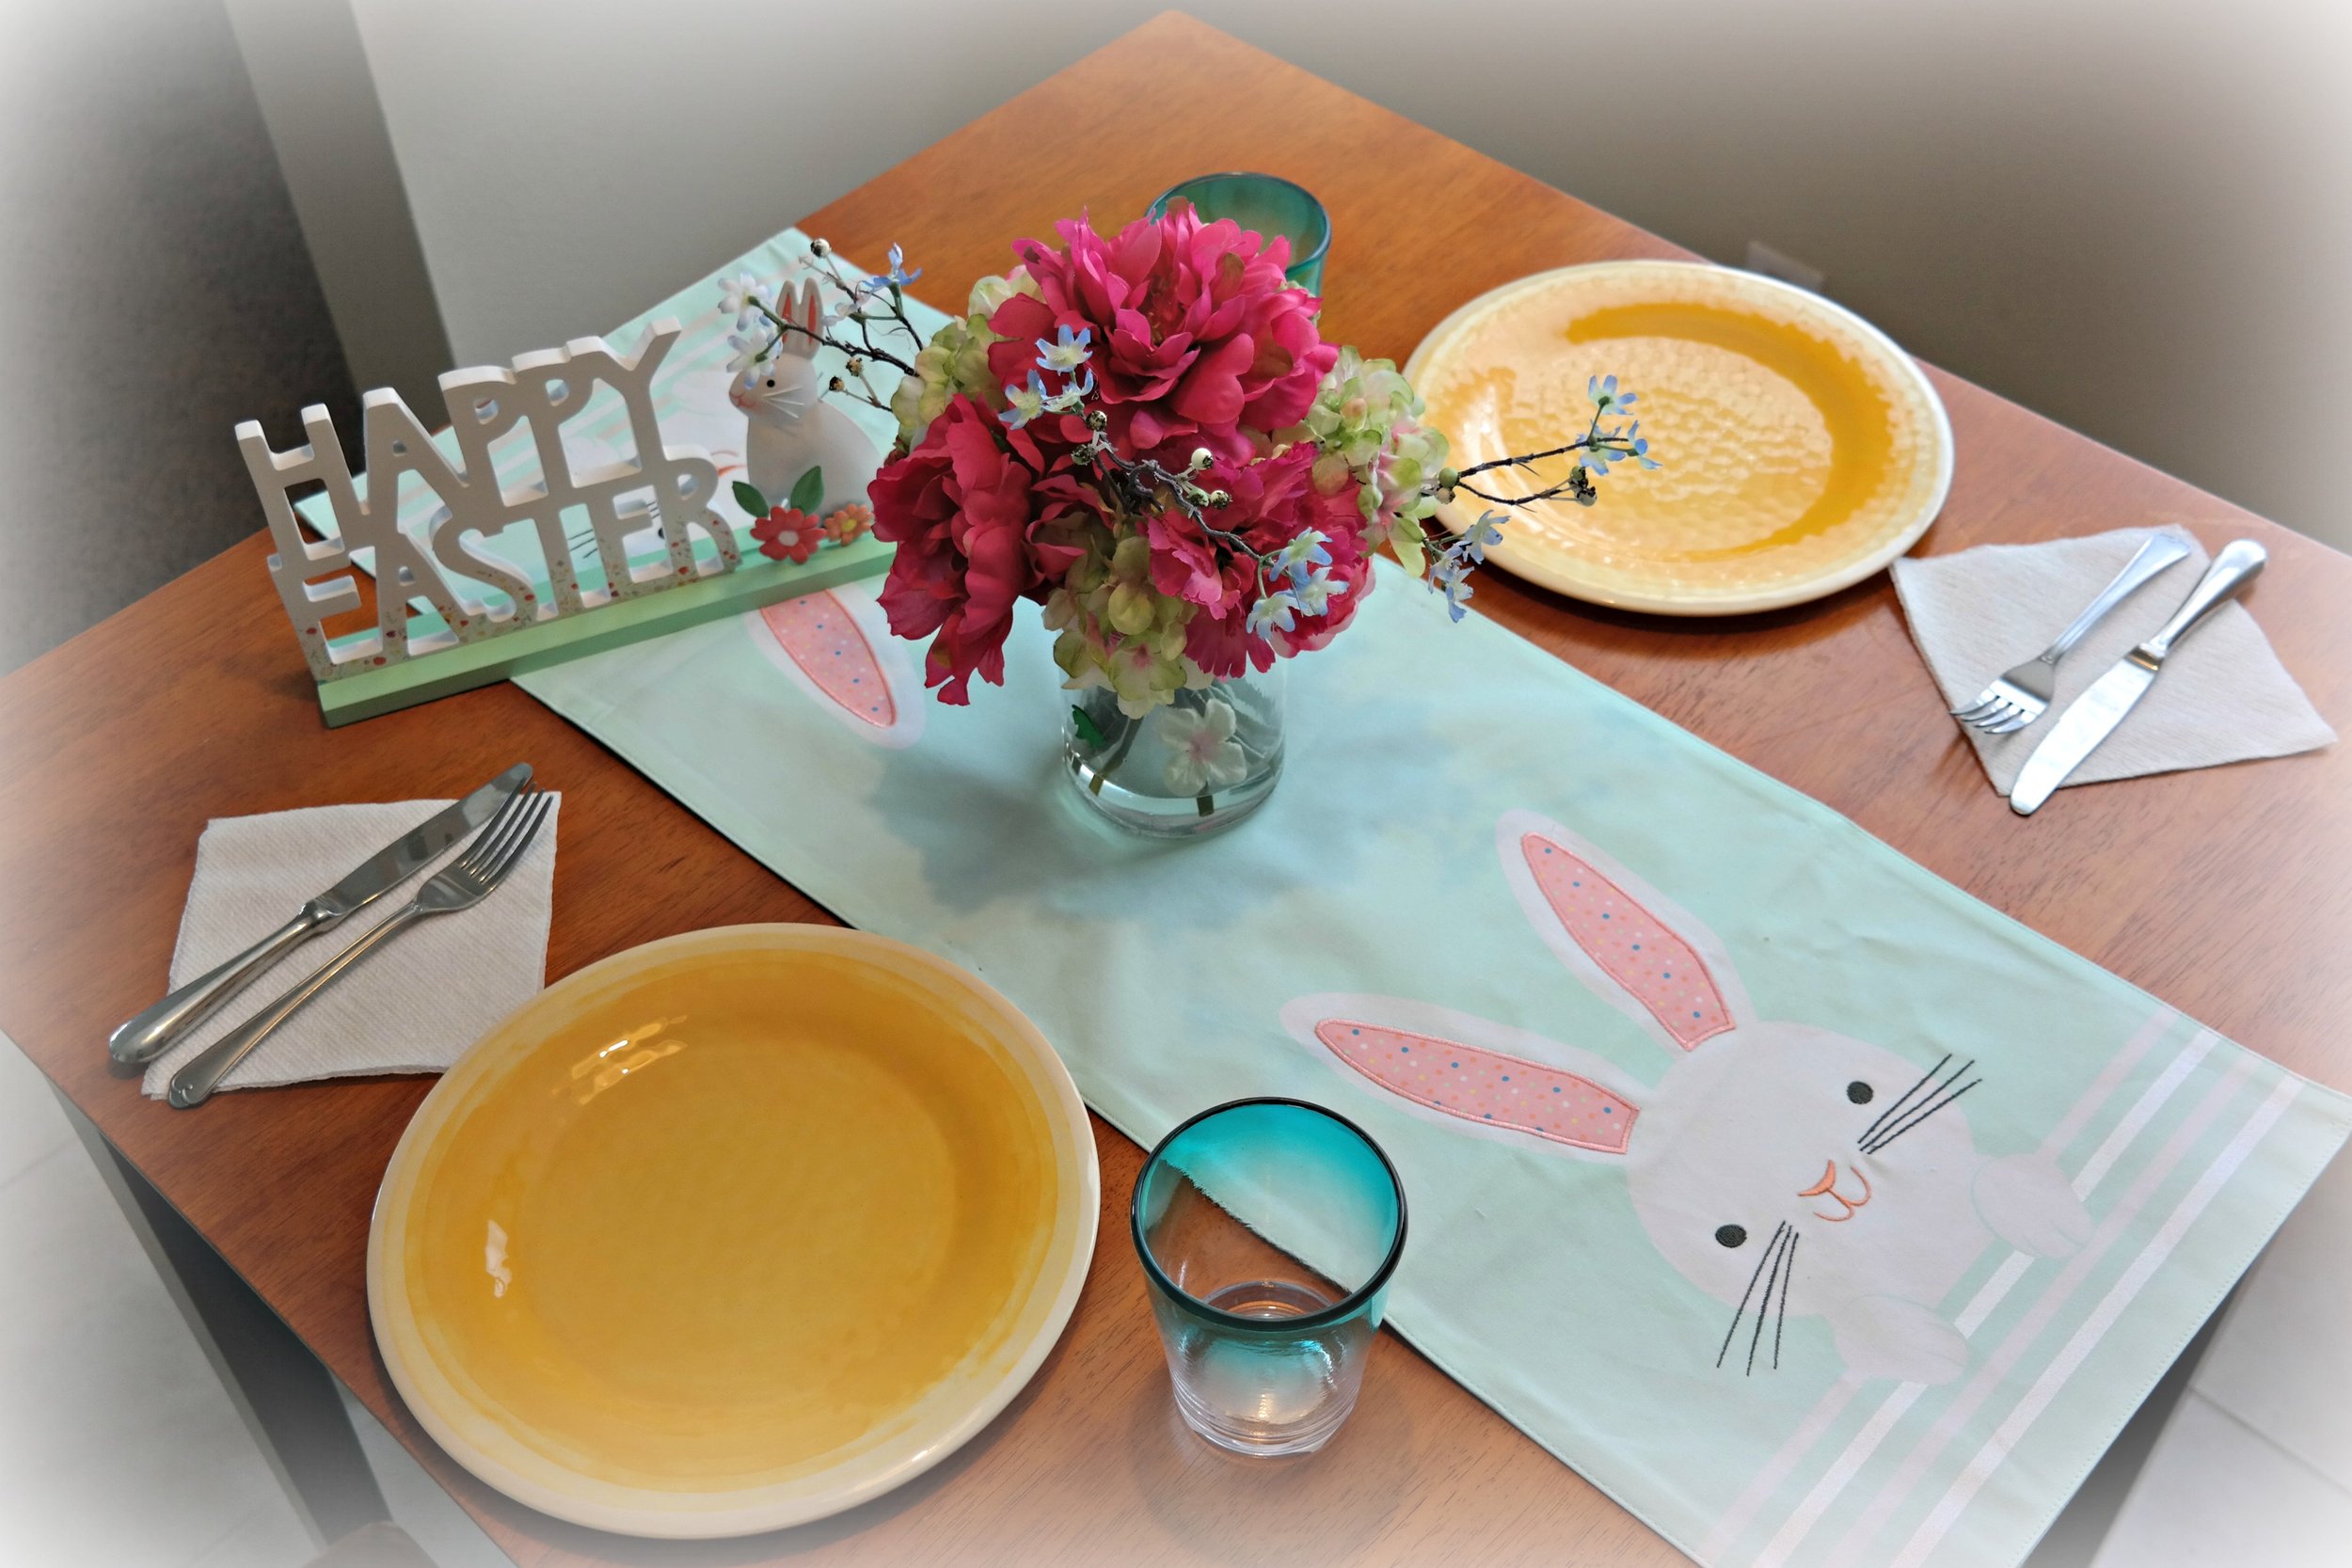 Easter table setting. #SpringAtKohls #spon